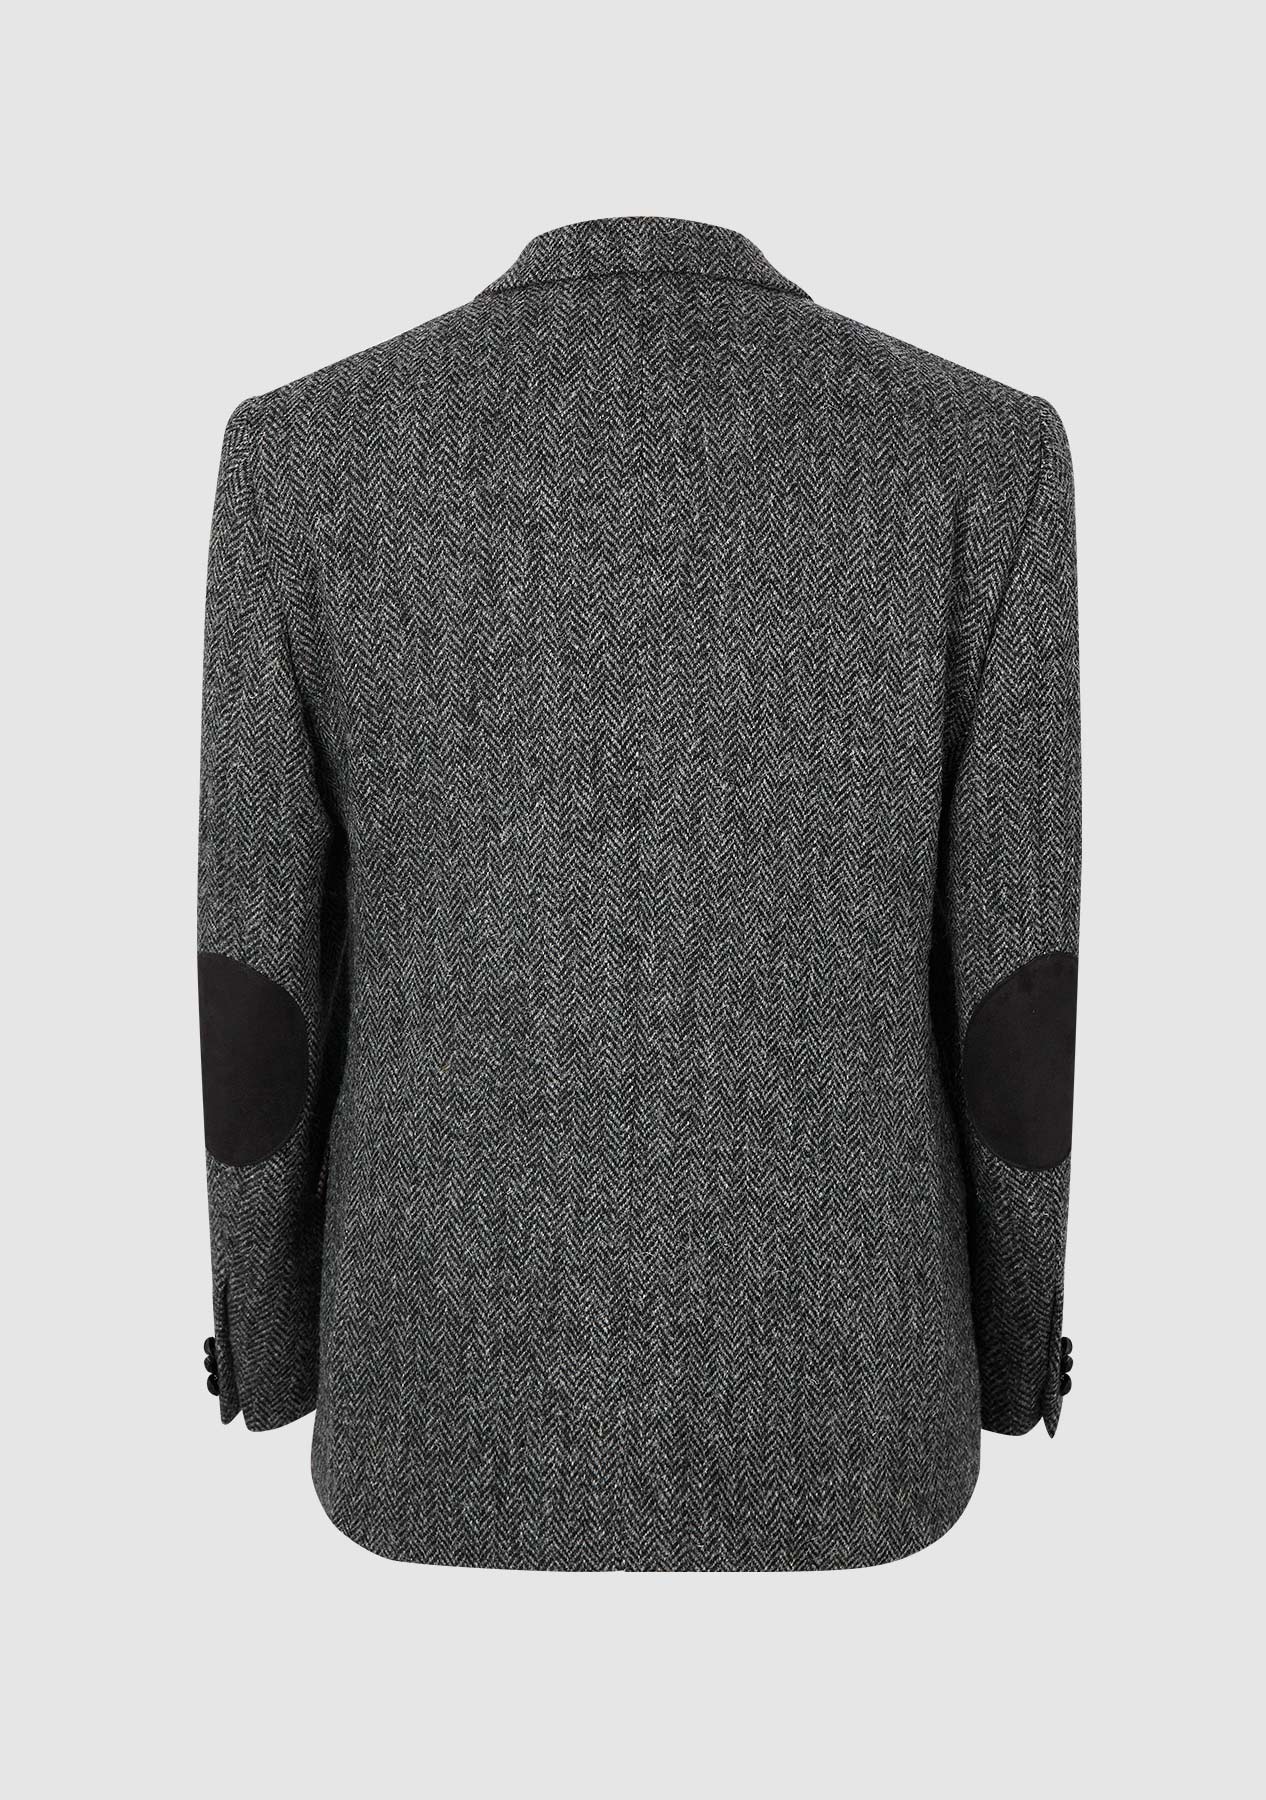 Bucktrout Charcoal Grey Harris Tweed Patrick Jacket